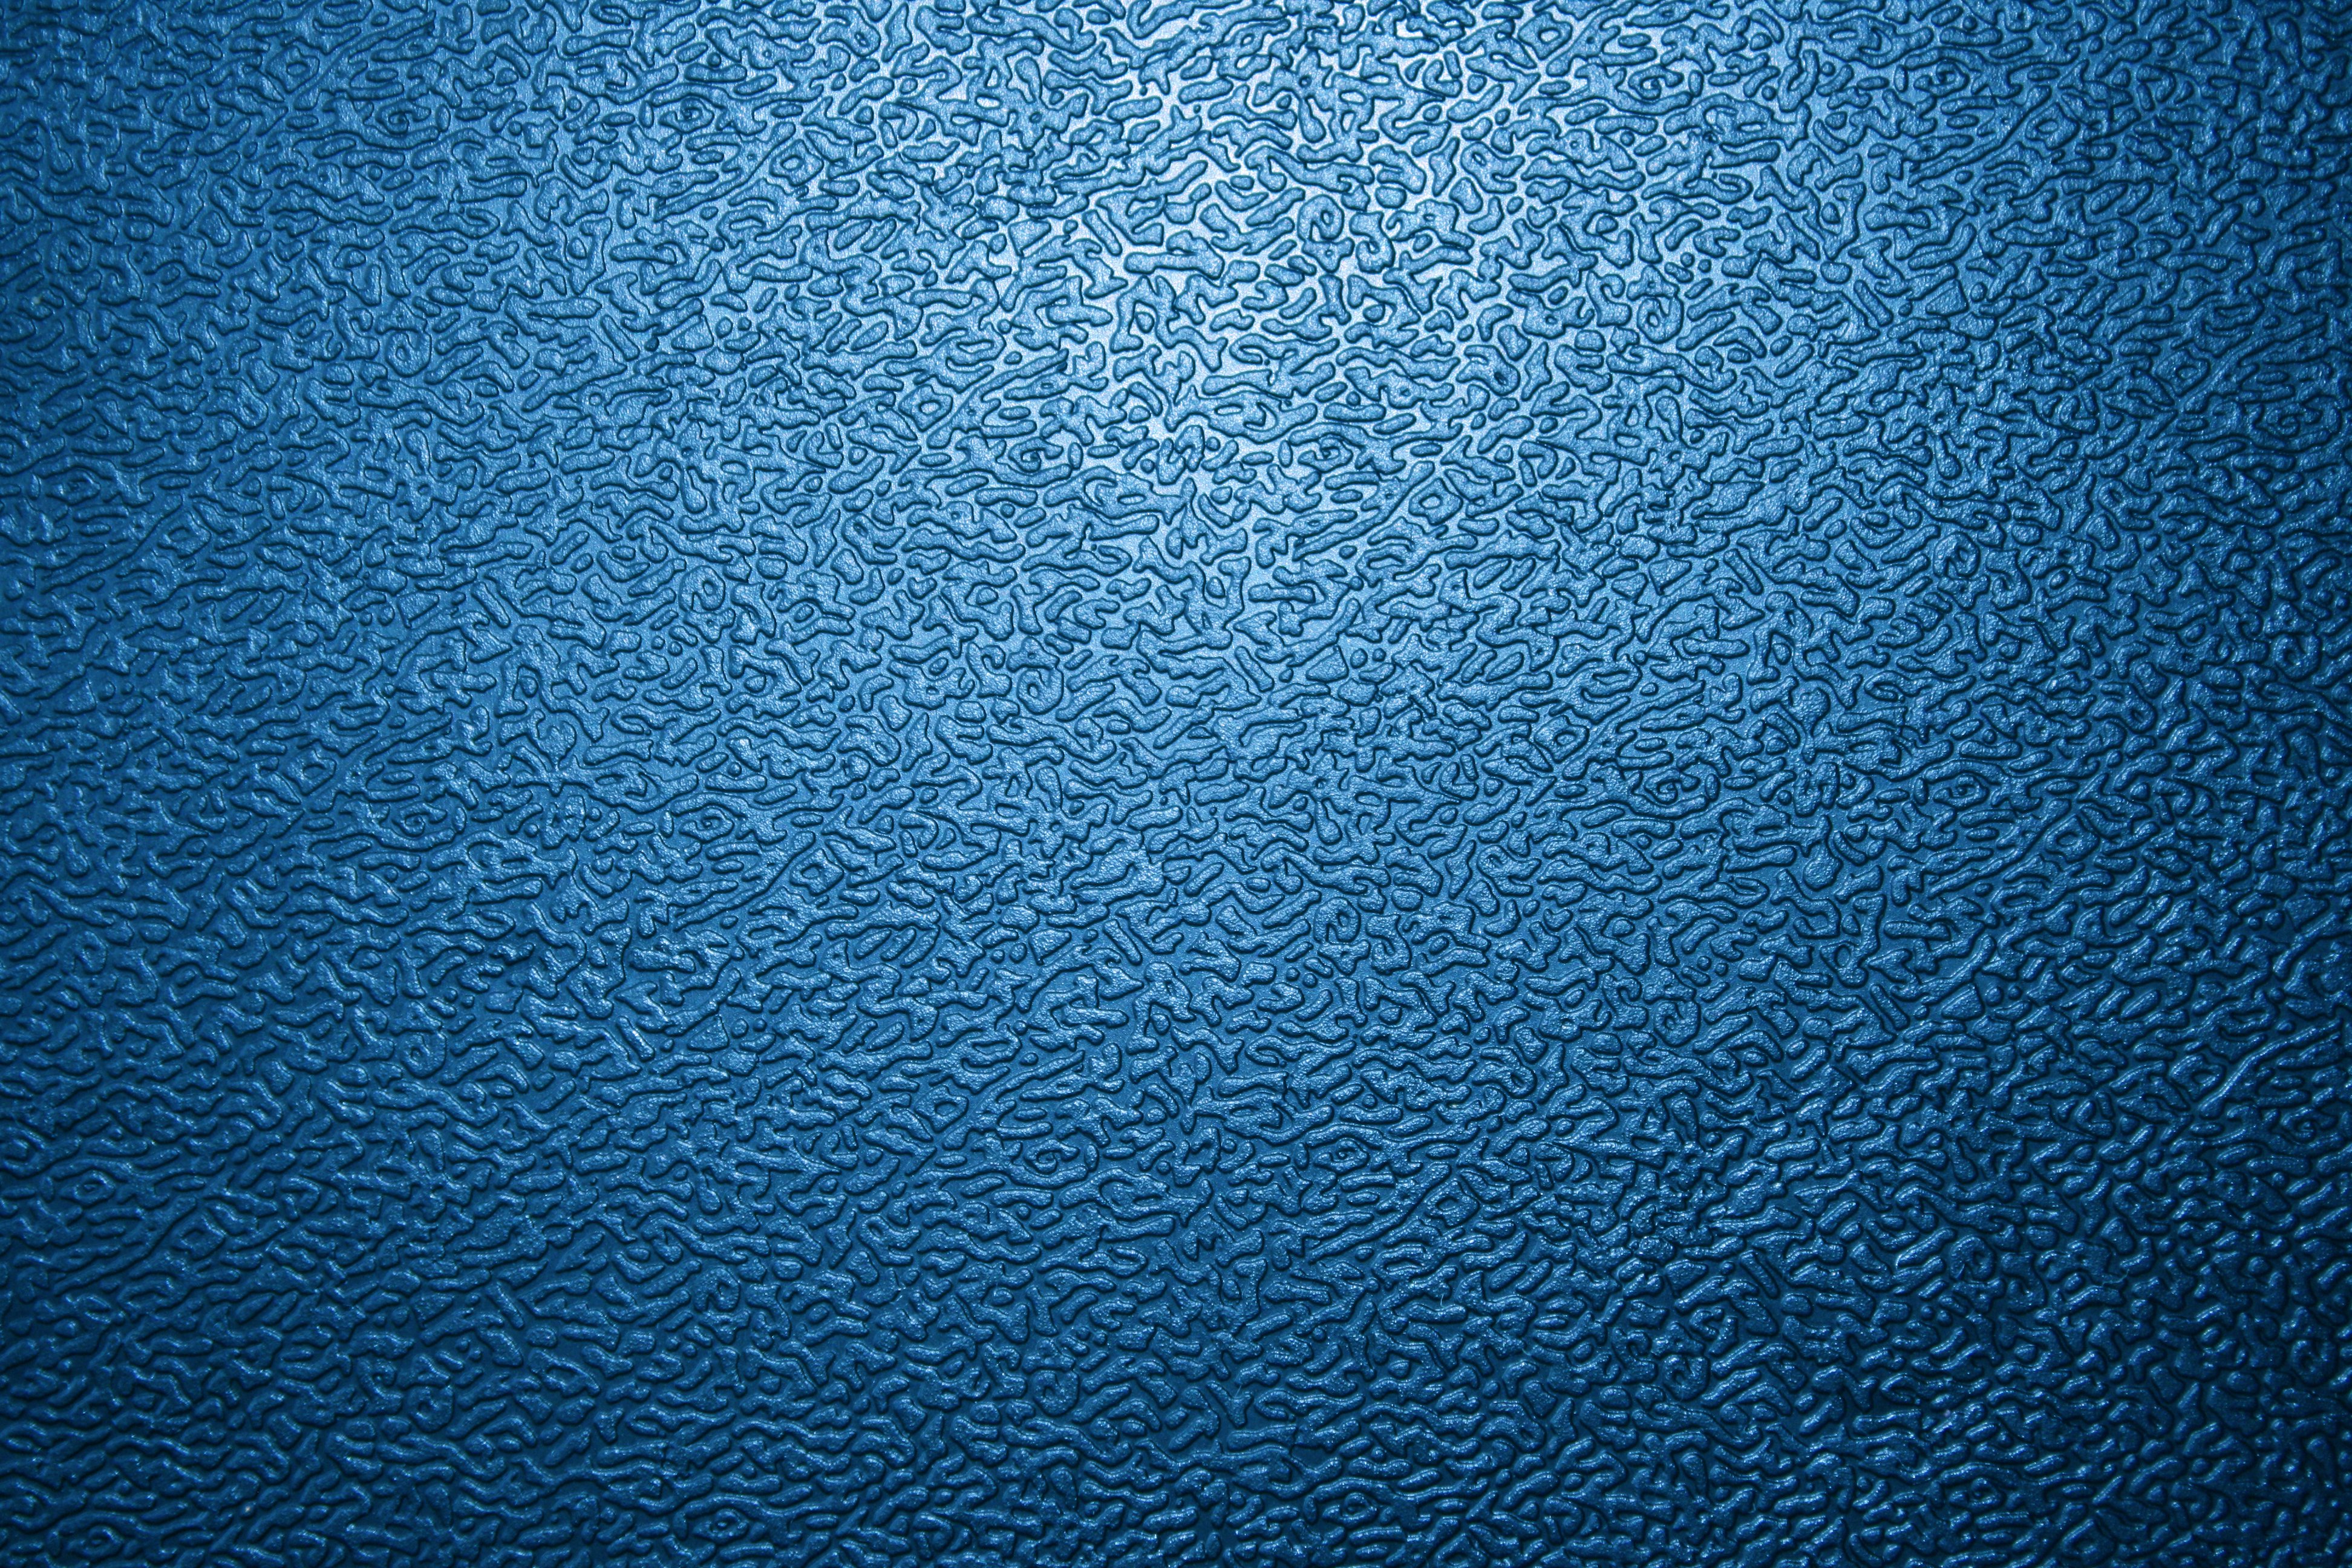 Textured Blue Plastic Close Up Picture Photograph Photos